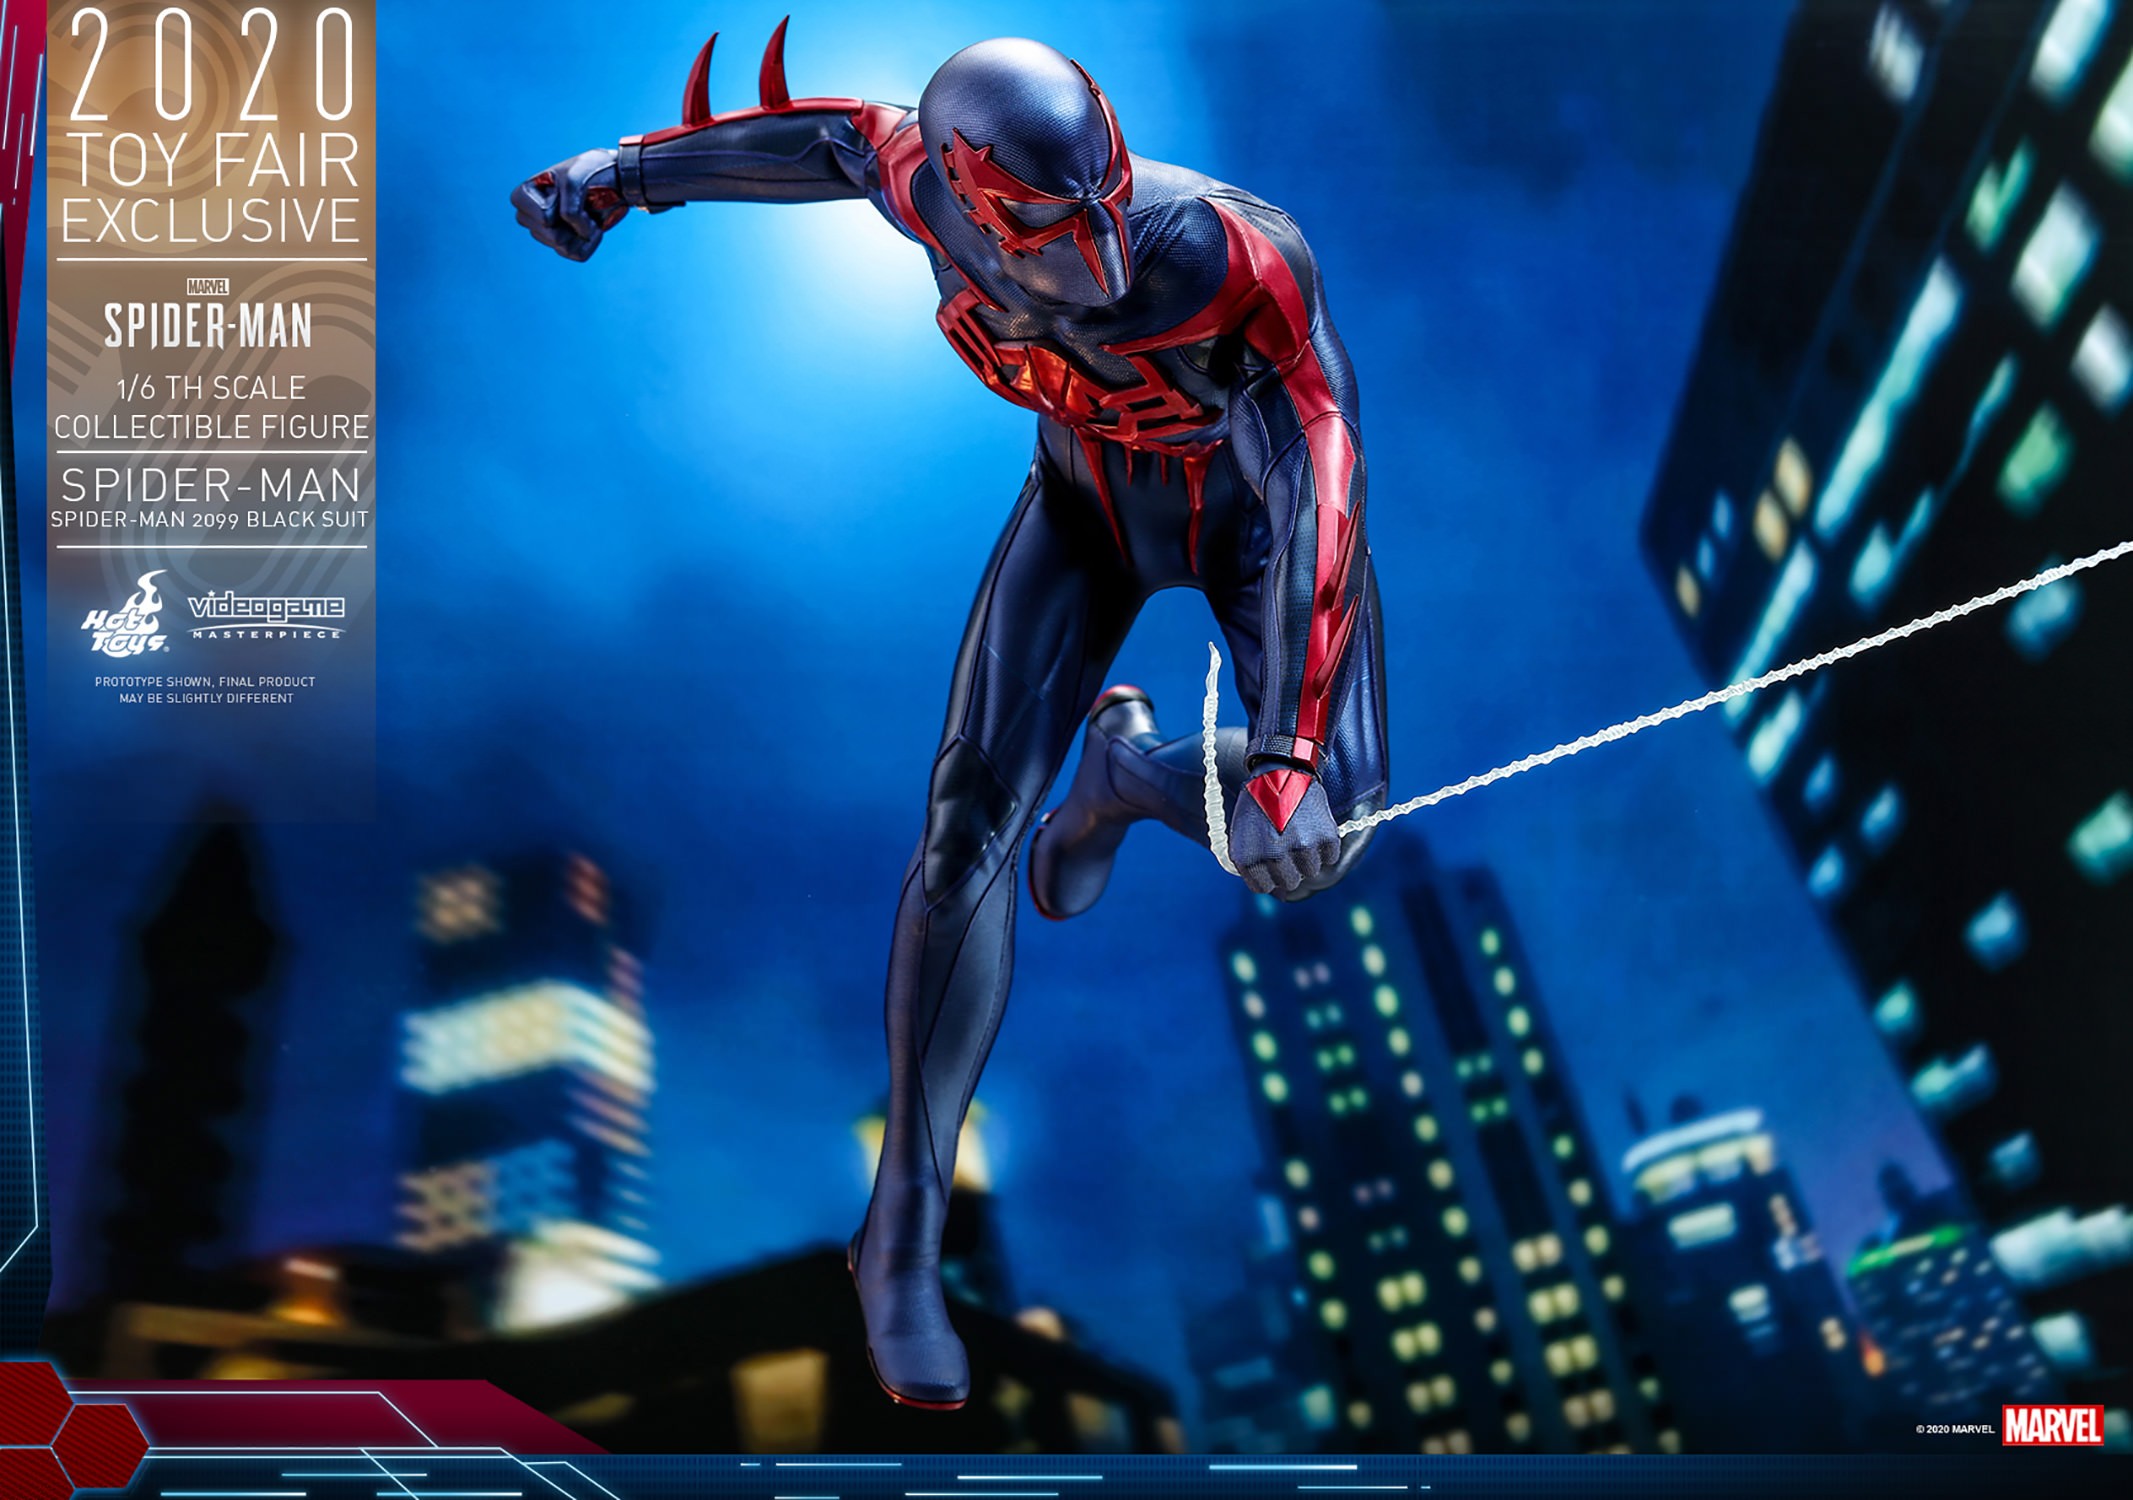 Spider-Man (Spider-Man 2099 Black Suit) Exclusive Edition (Prototype Shown) View 16